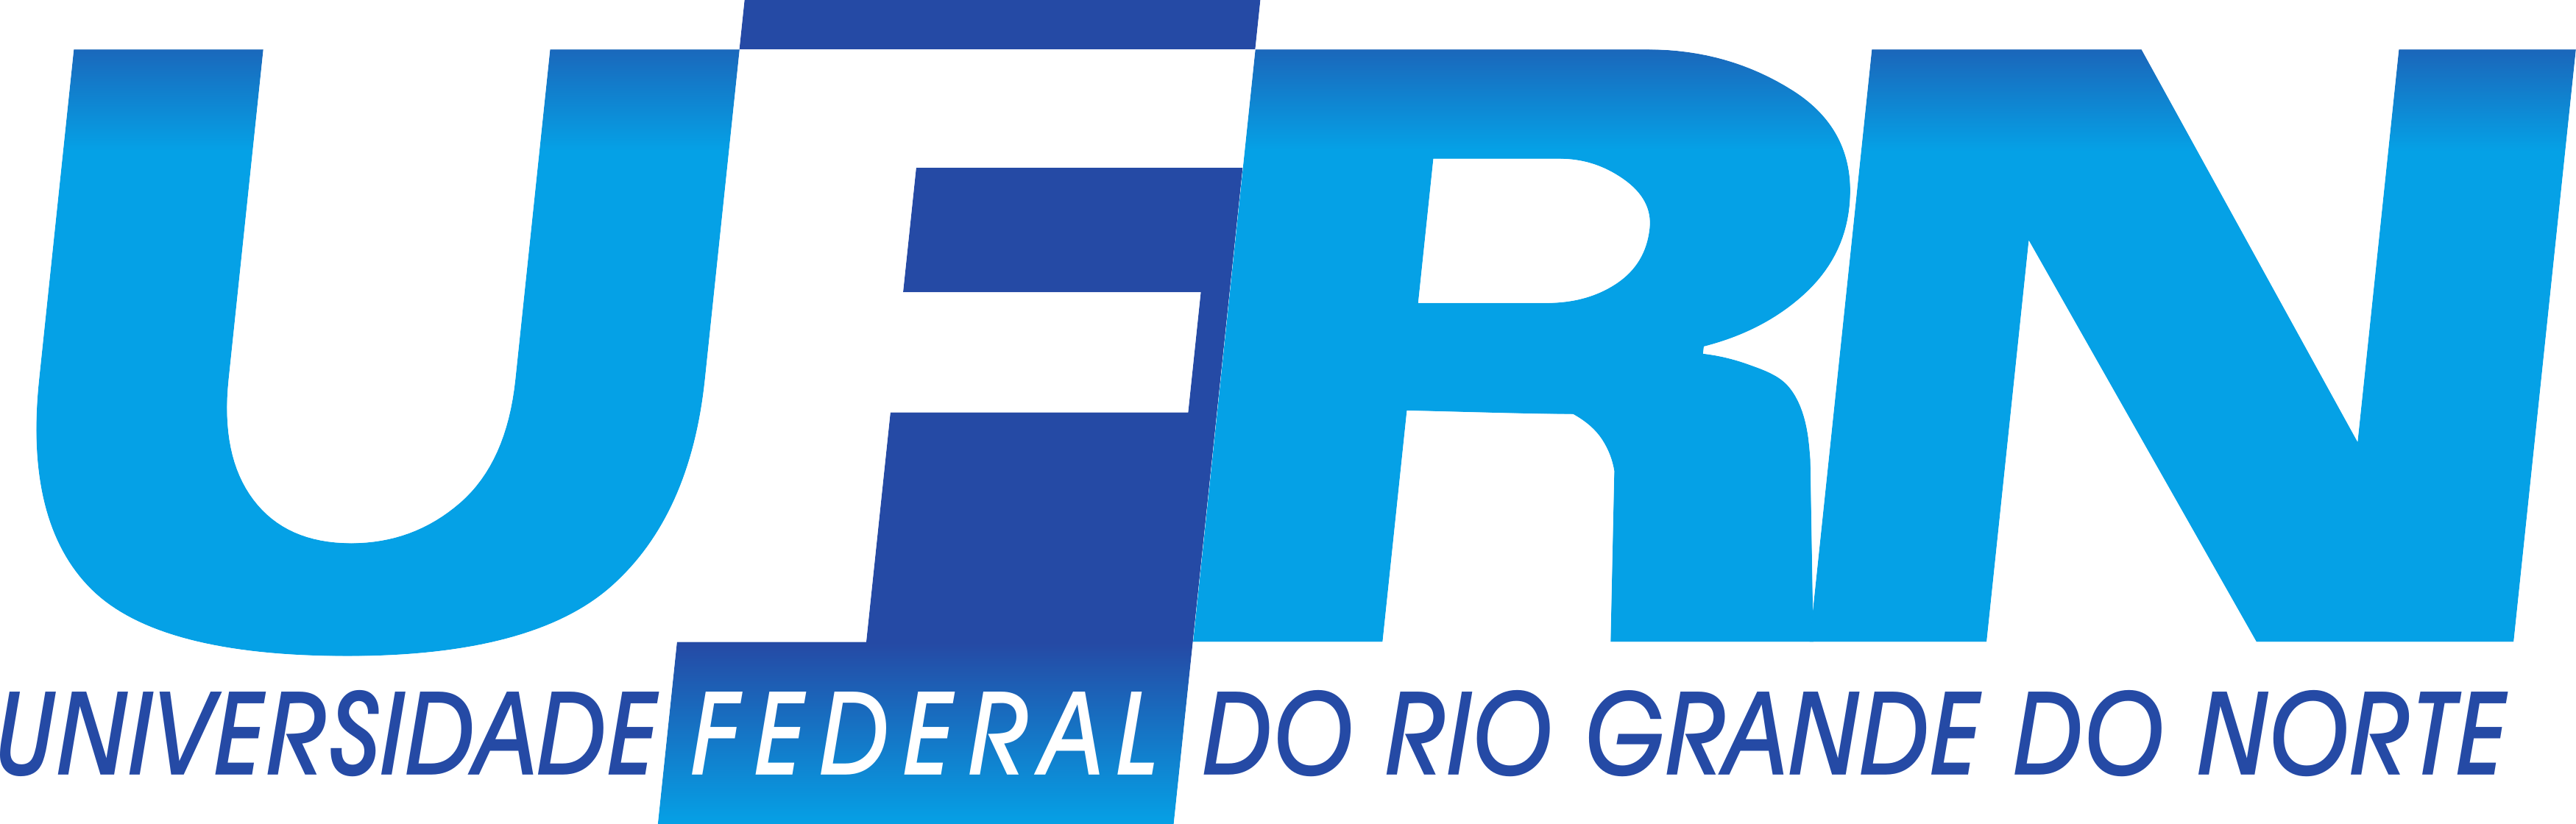 UFRN logo.